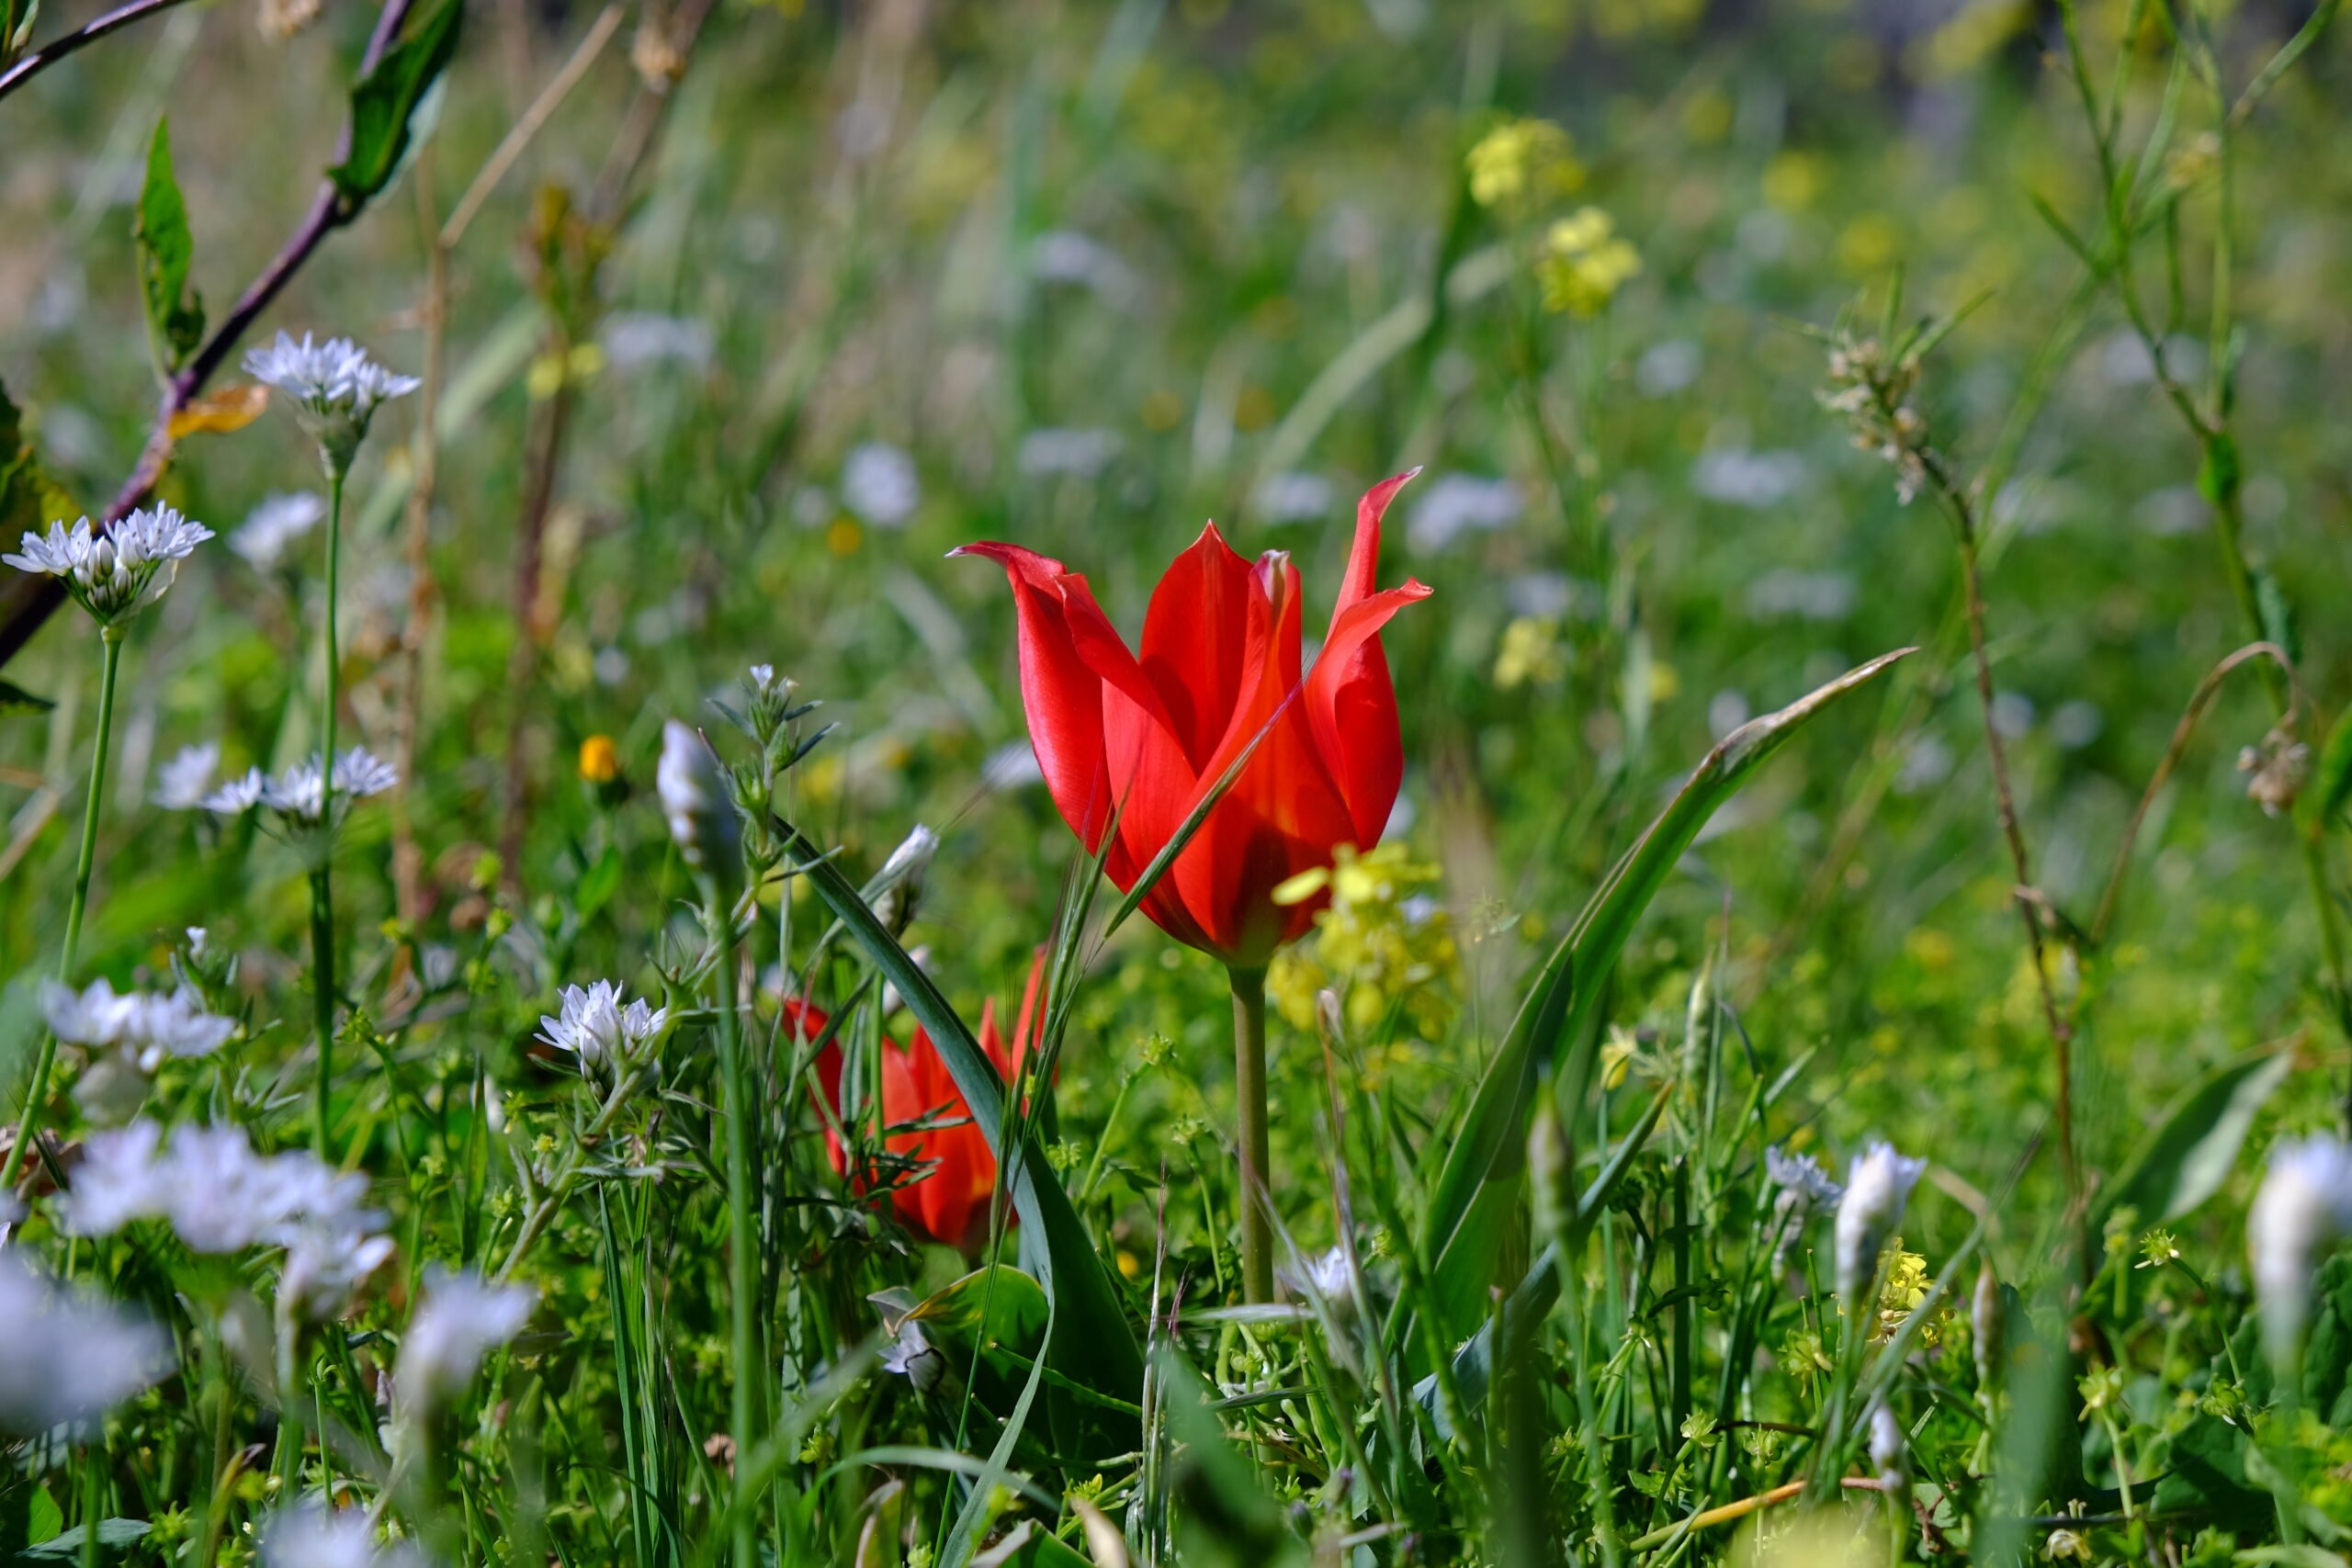 Cypriot tulip – Tulipa cypria